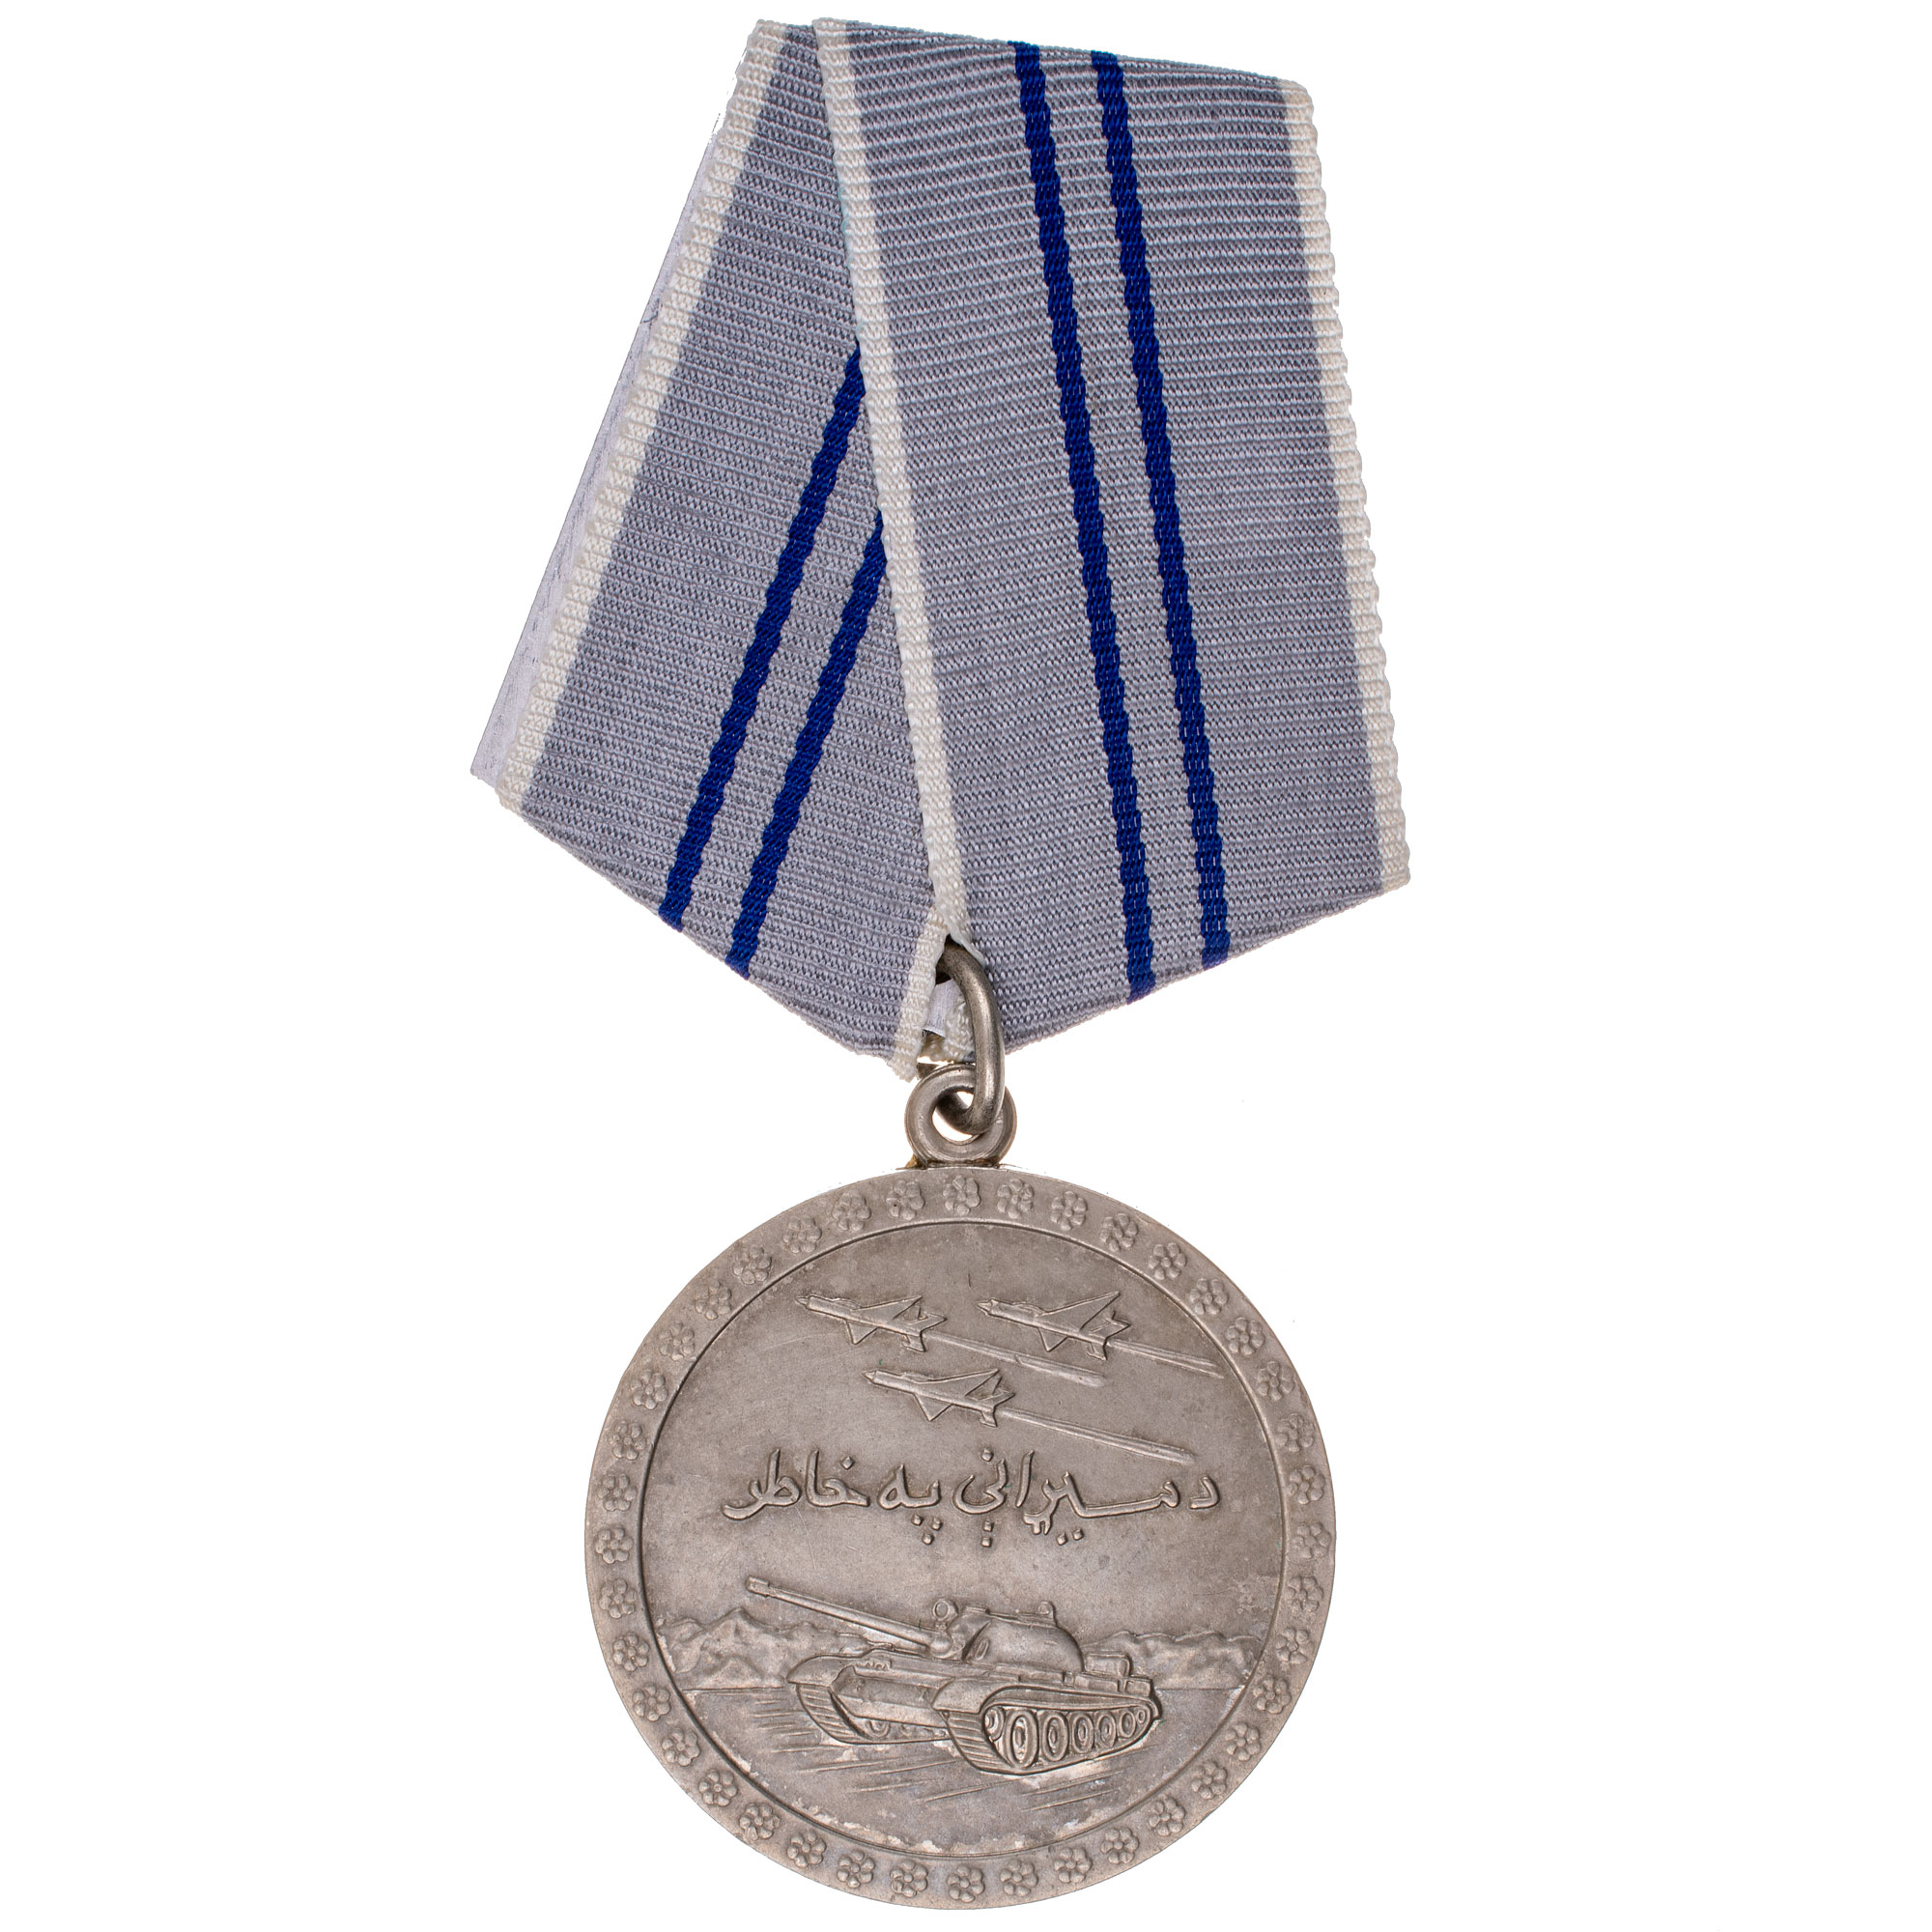 Афганистан. Медаль" За Отвагу" 1980 - 1992 гг.